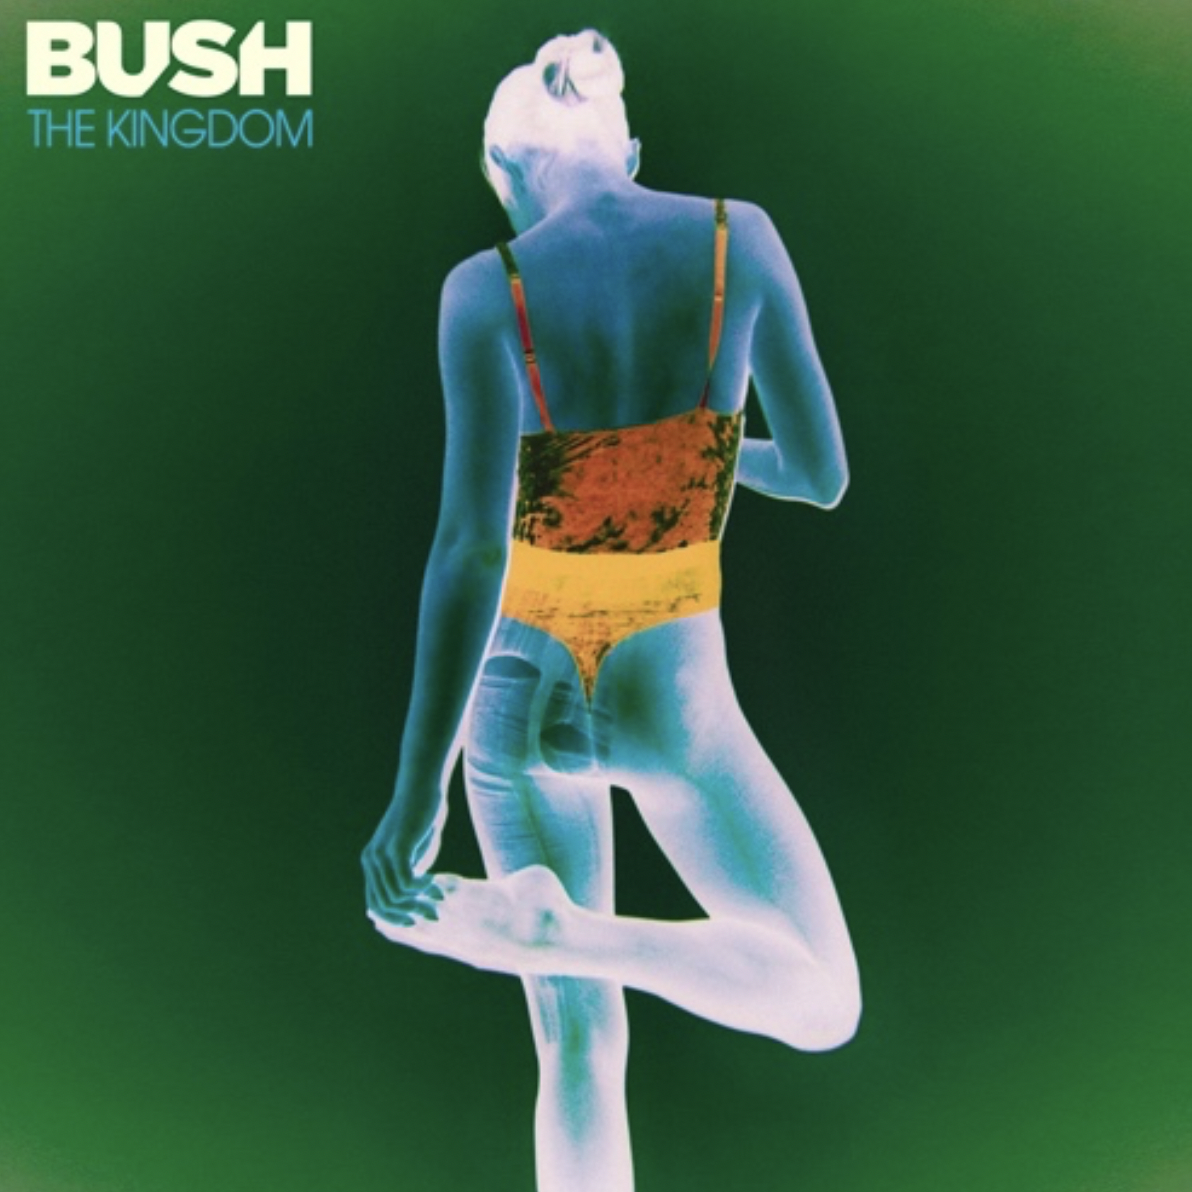 BUSH RELEASES MUCH-AWAITED EIGHTH STUDIO ALBUM THE KINGDOM